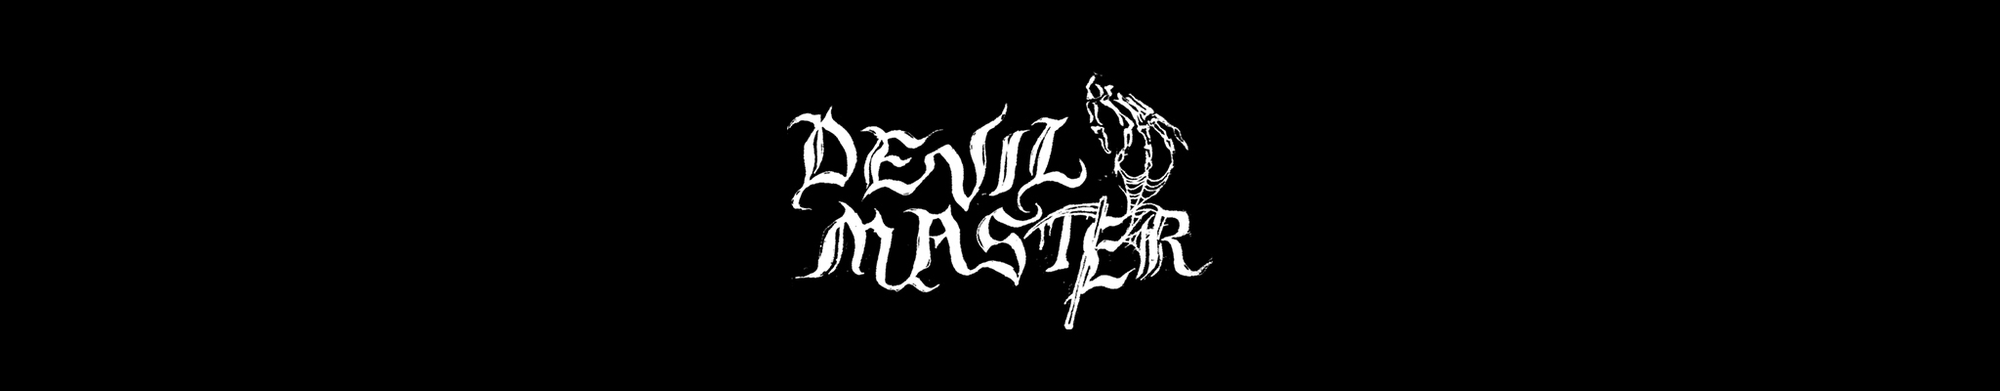 DEVIL MASTER